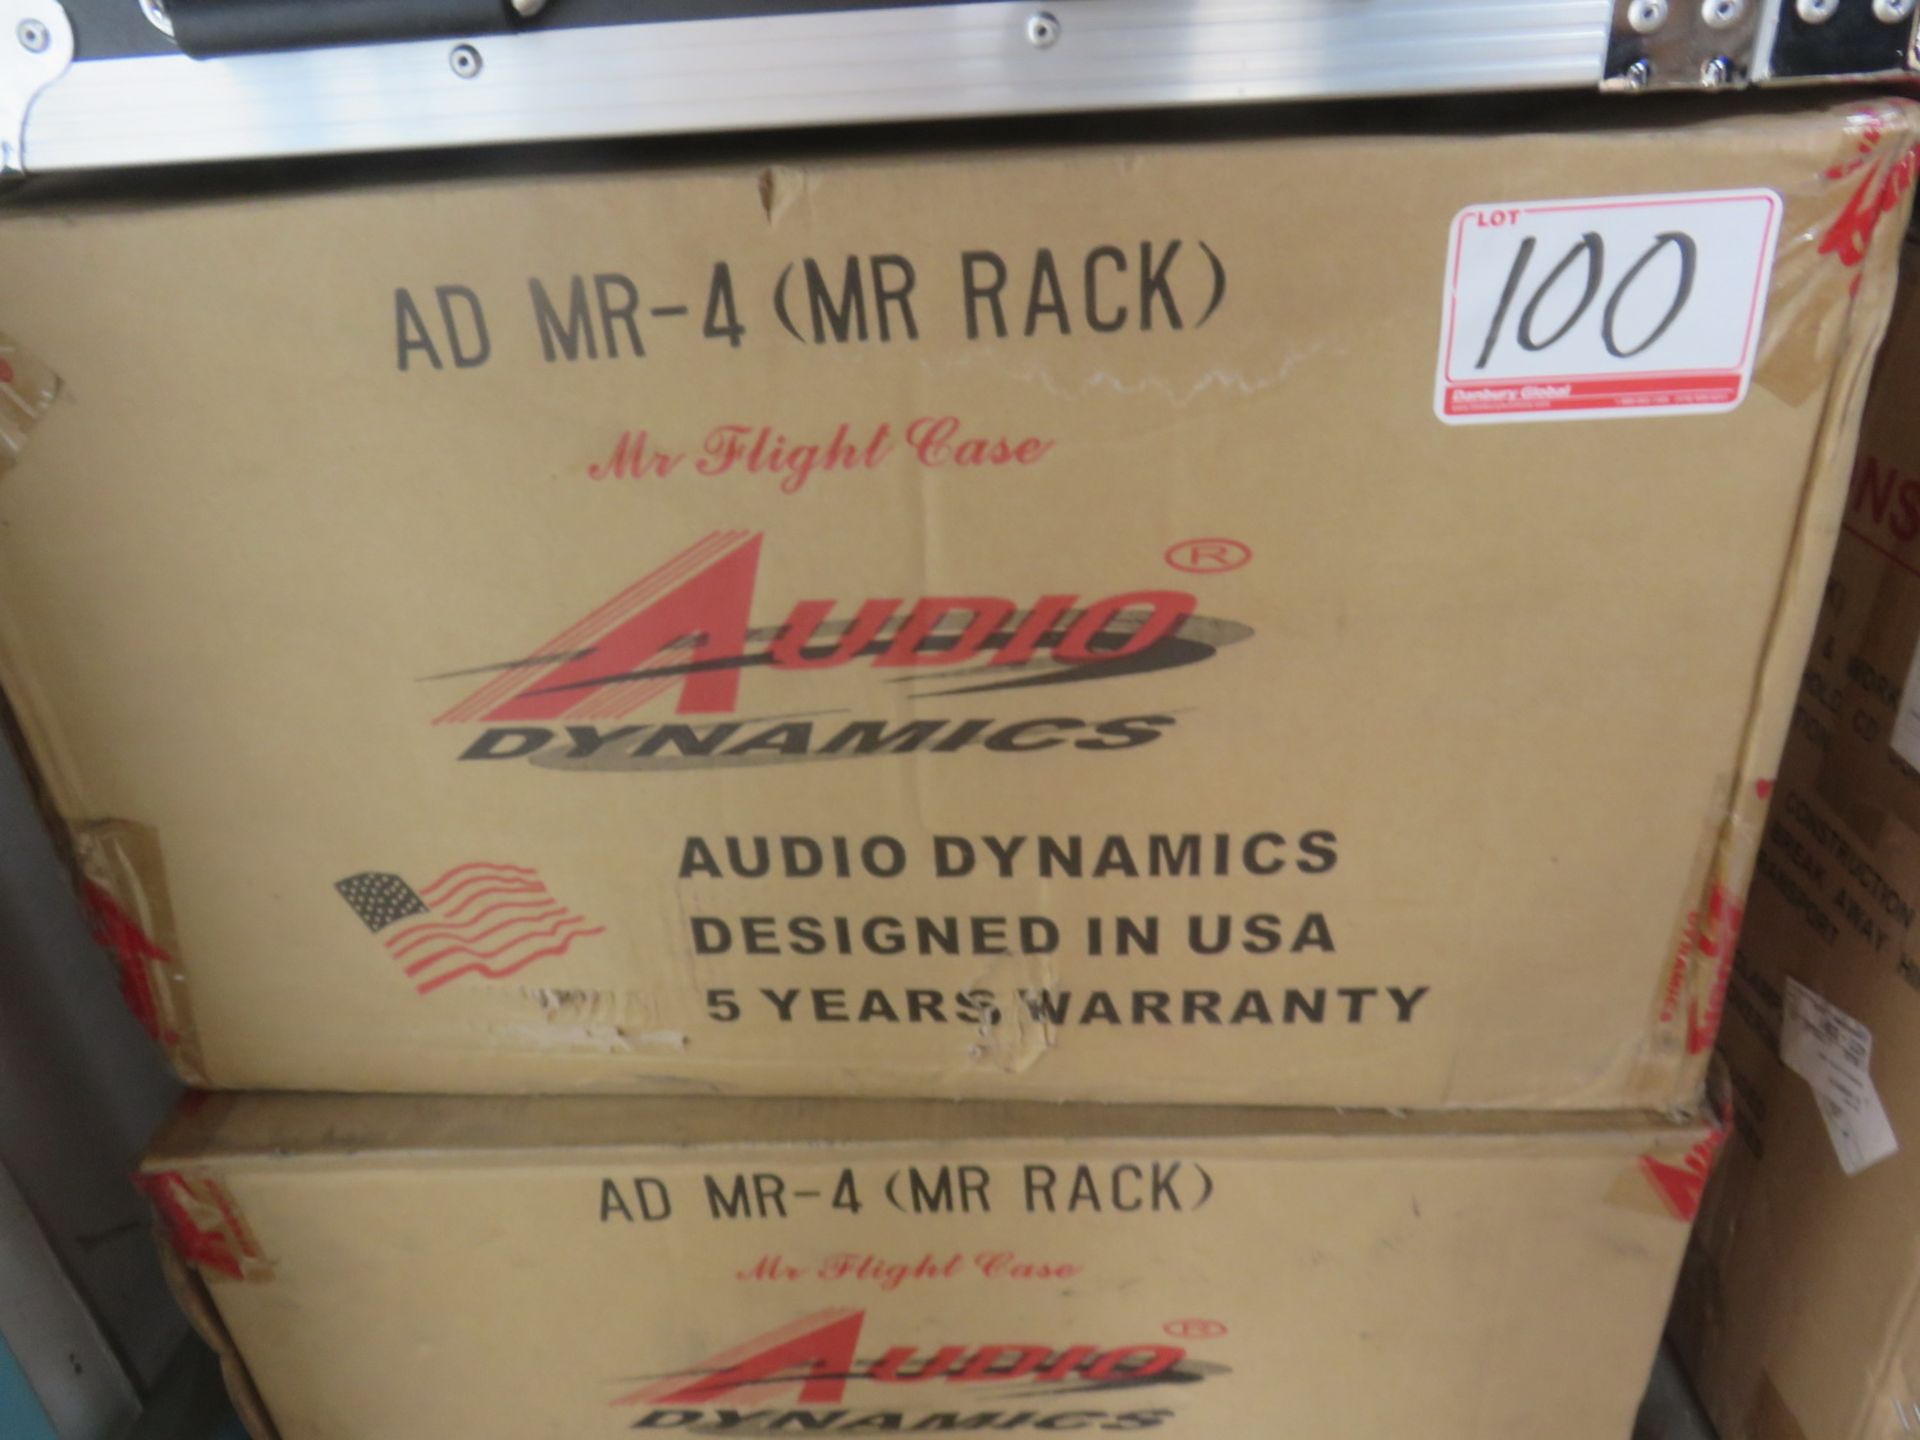 AUDIO DYNAMICS MOD MR4 BLACK 21 X 24 X 26" MIXER CASE (IN BOX) - Image 3 of 3